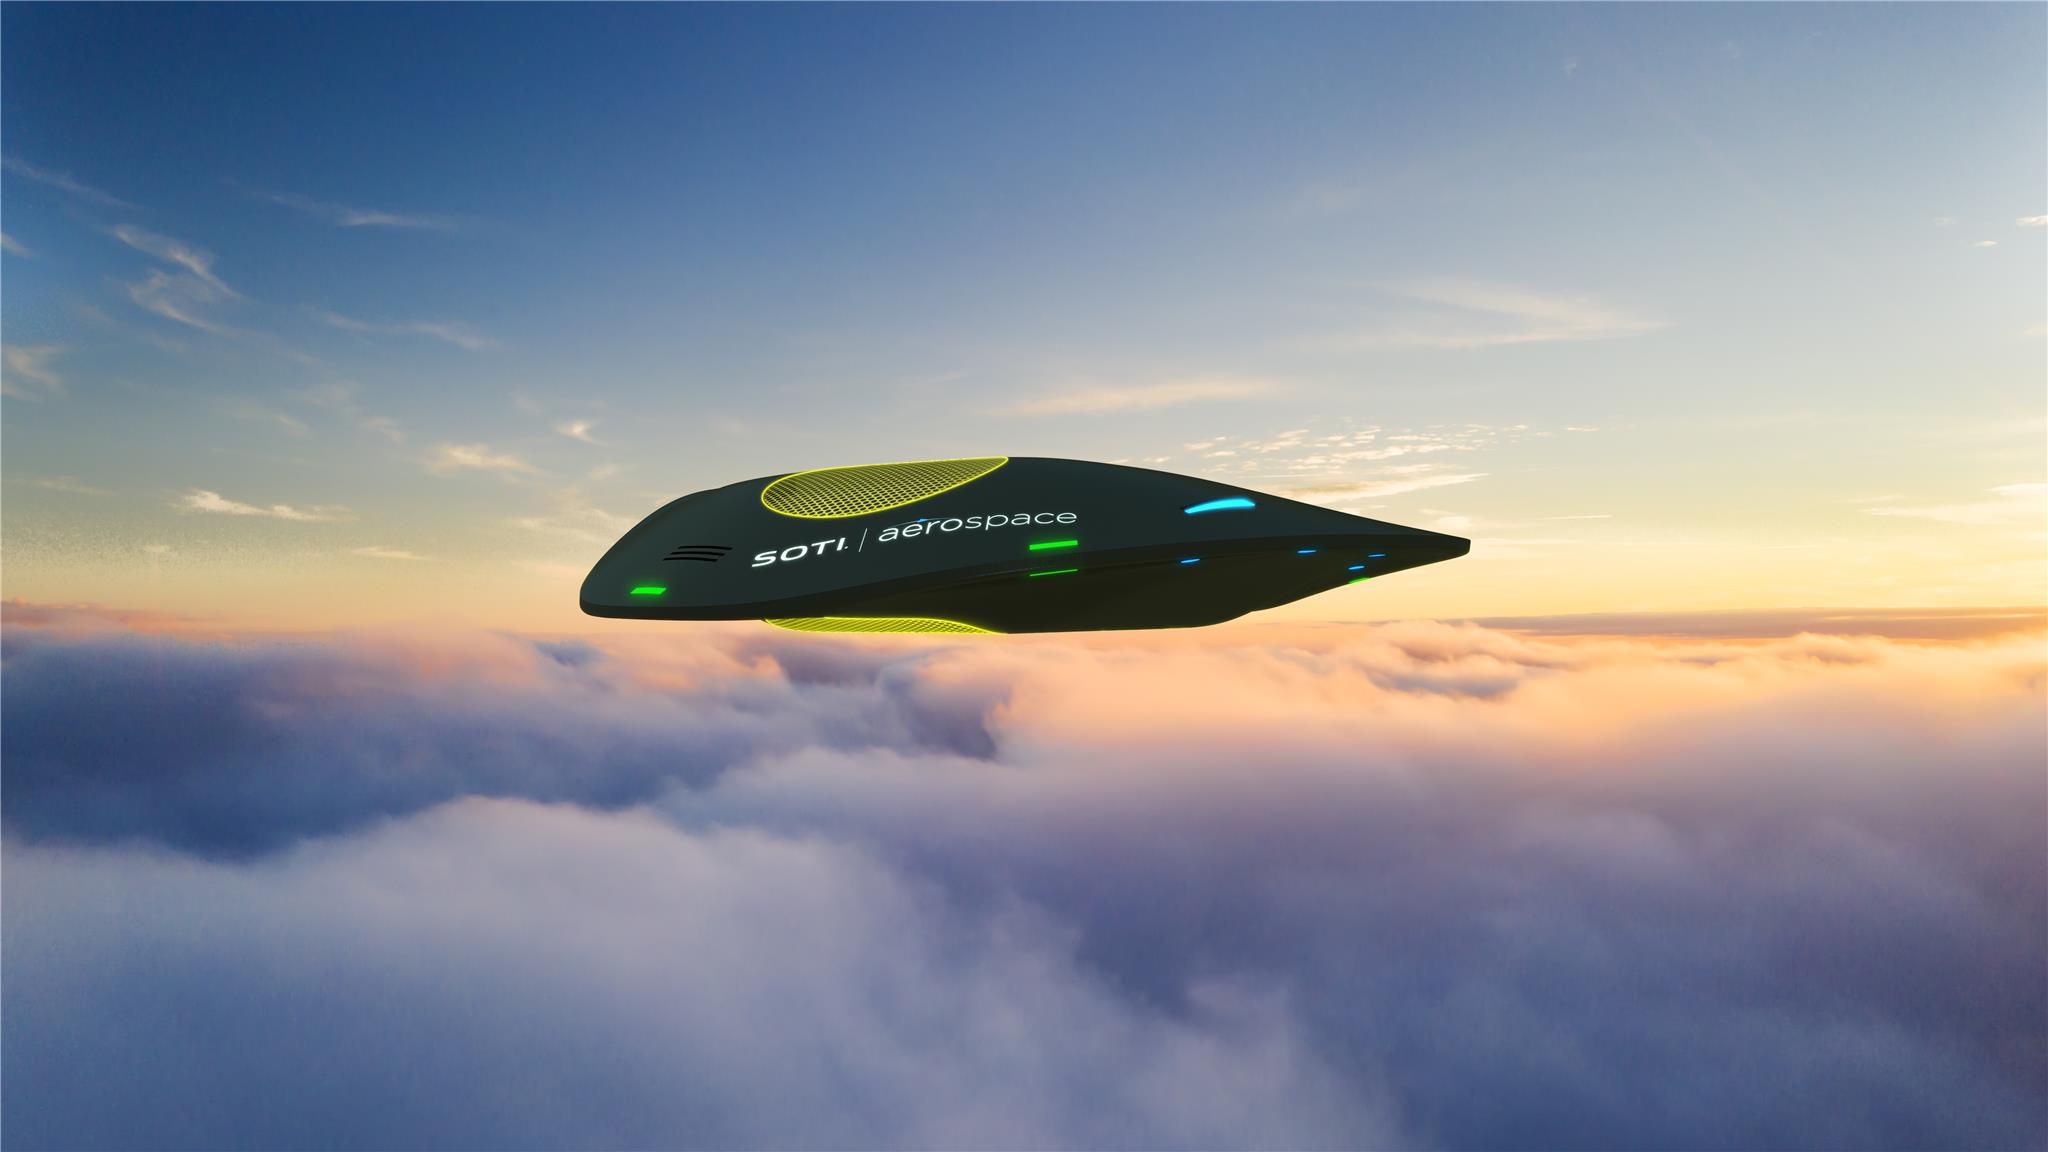 SOTI Aerospace's drone shape reduces turbulence and minimizes power consumption